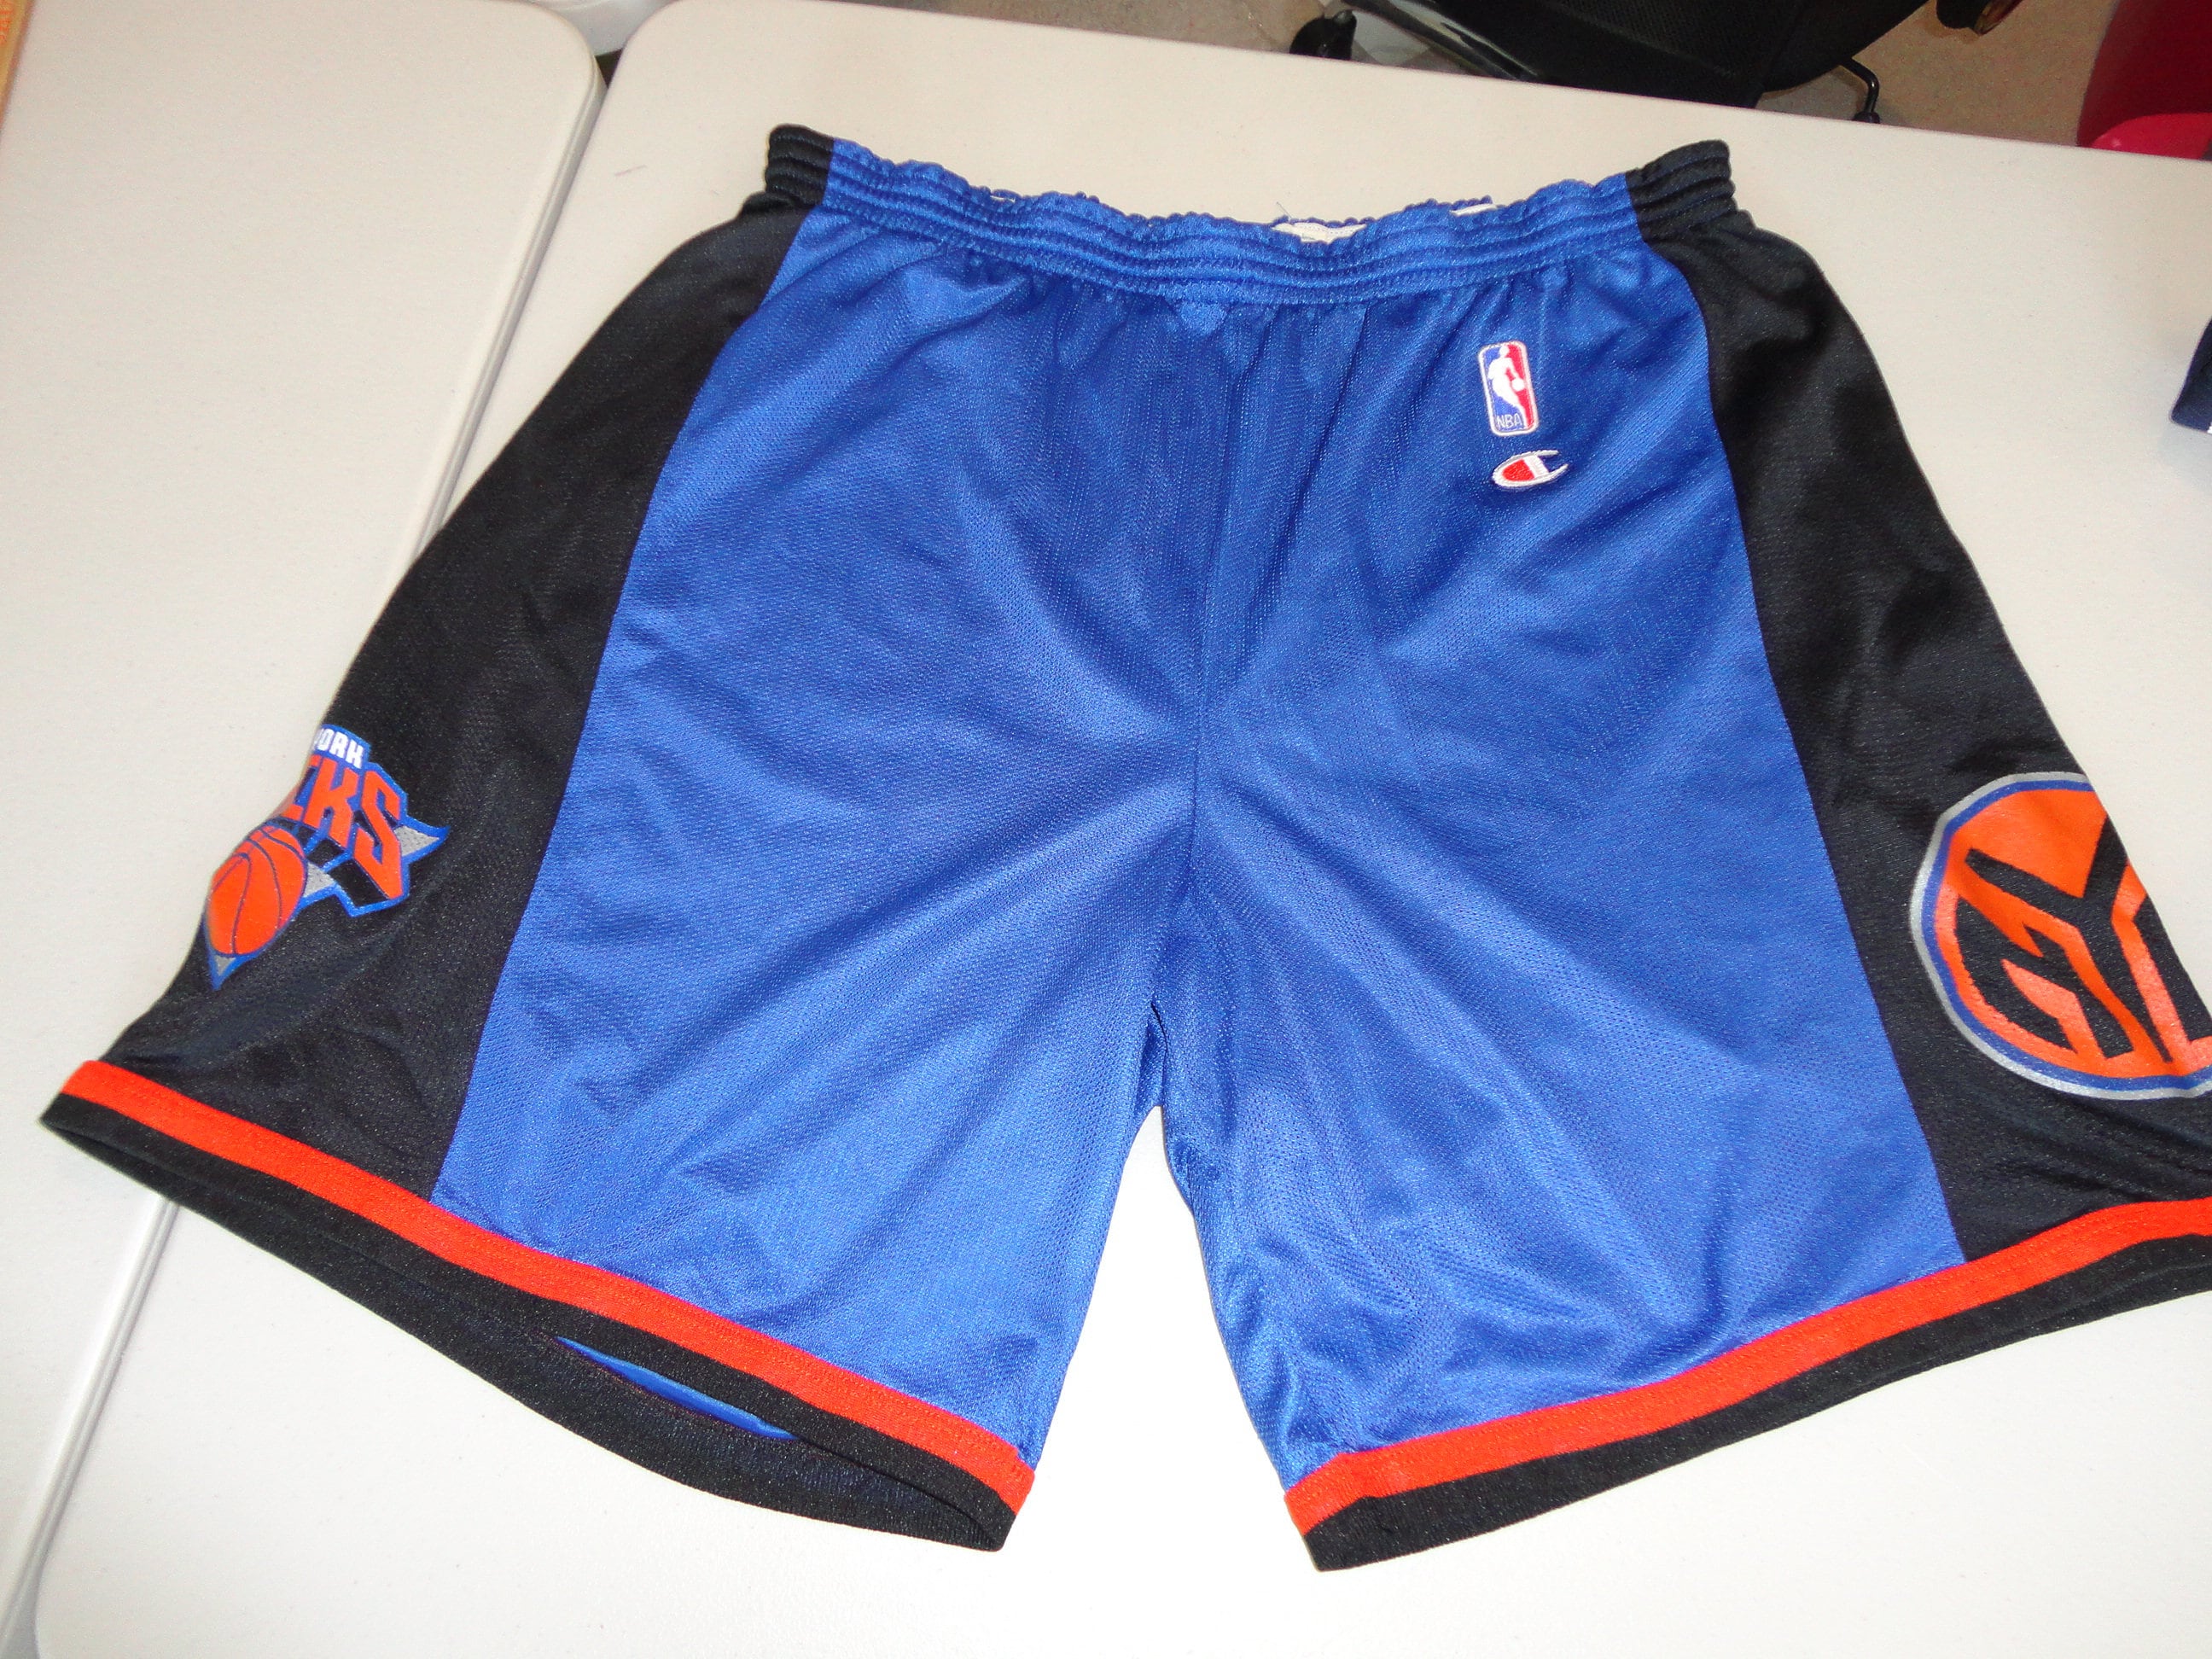 New York Knicks NBA Basketball Shorts Made by Adidas Trefoil 